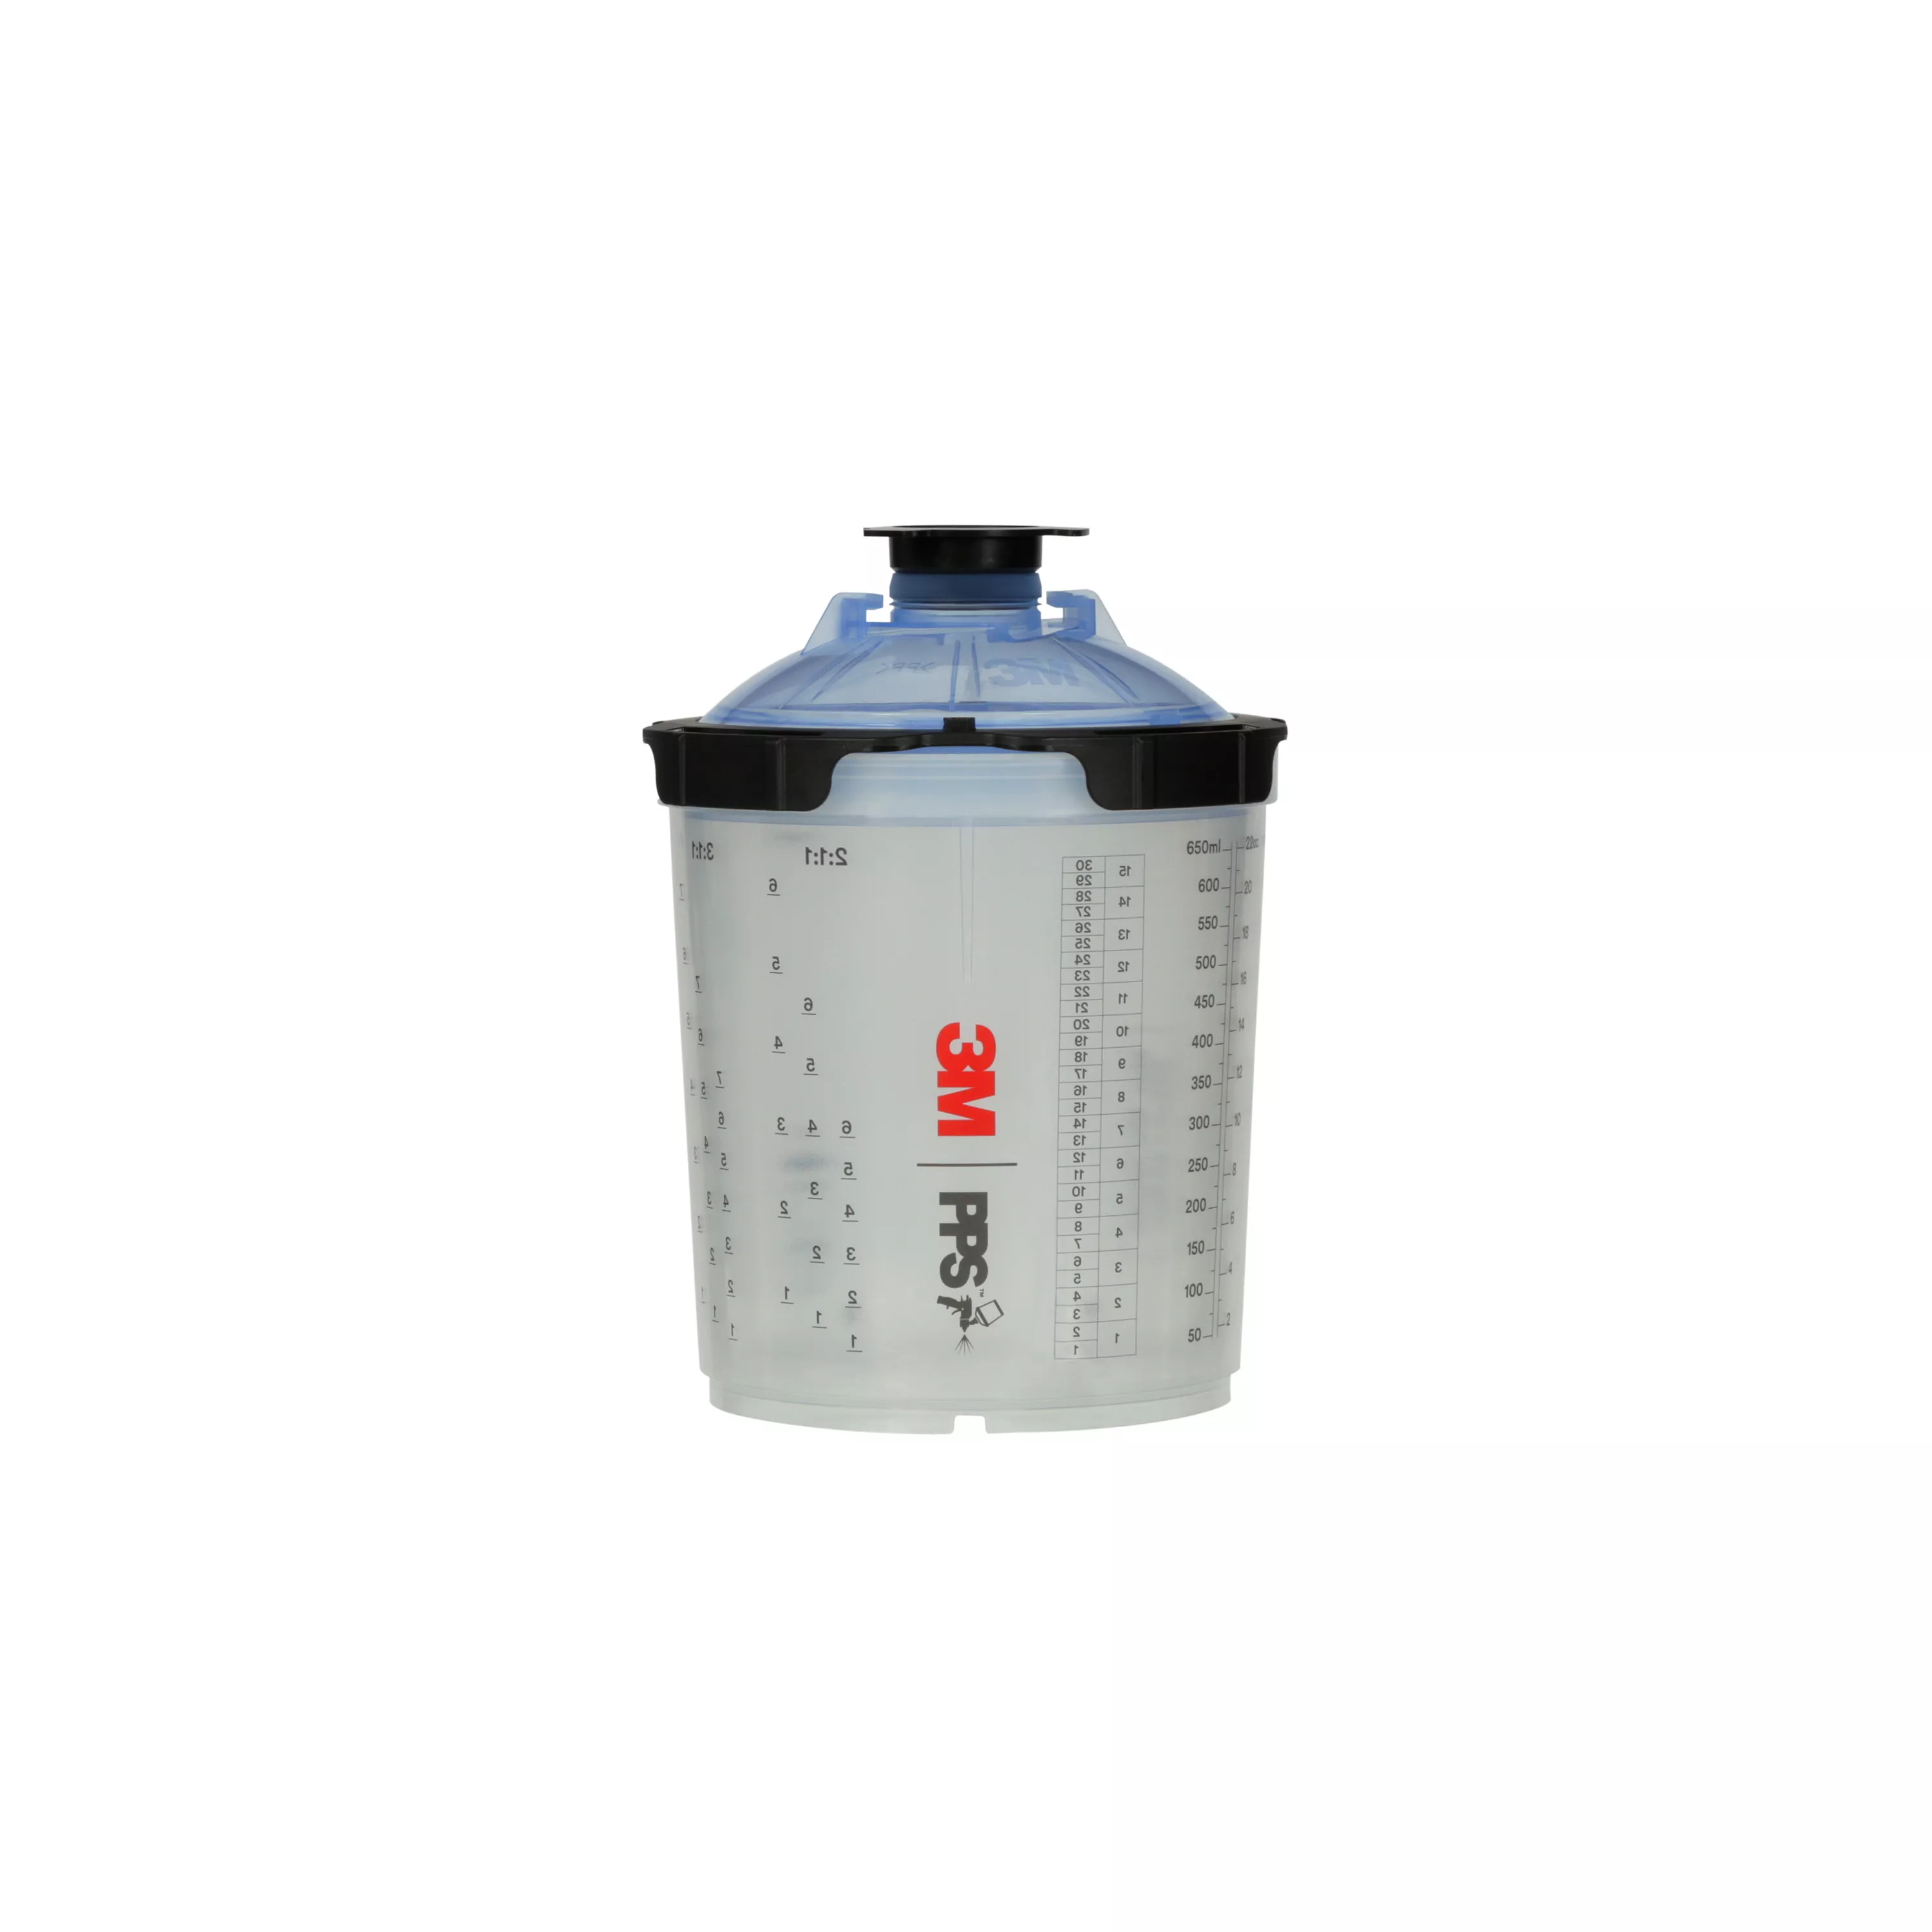 3M™ PPS™ Series 2.0 Spray Cup System Kit 26301, Standard (22 fl oz, 650
mL), 125 Micron Filter, 1 Kit/Case